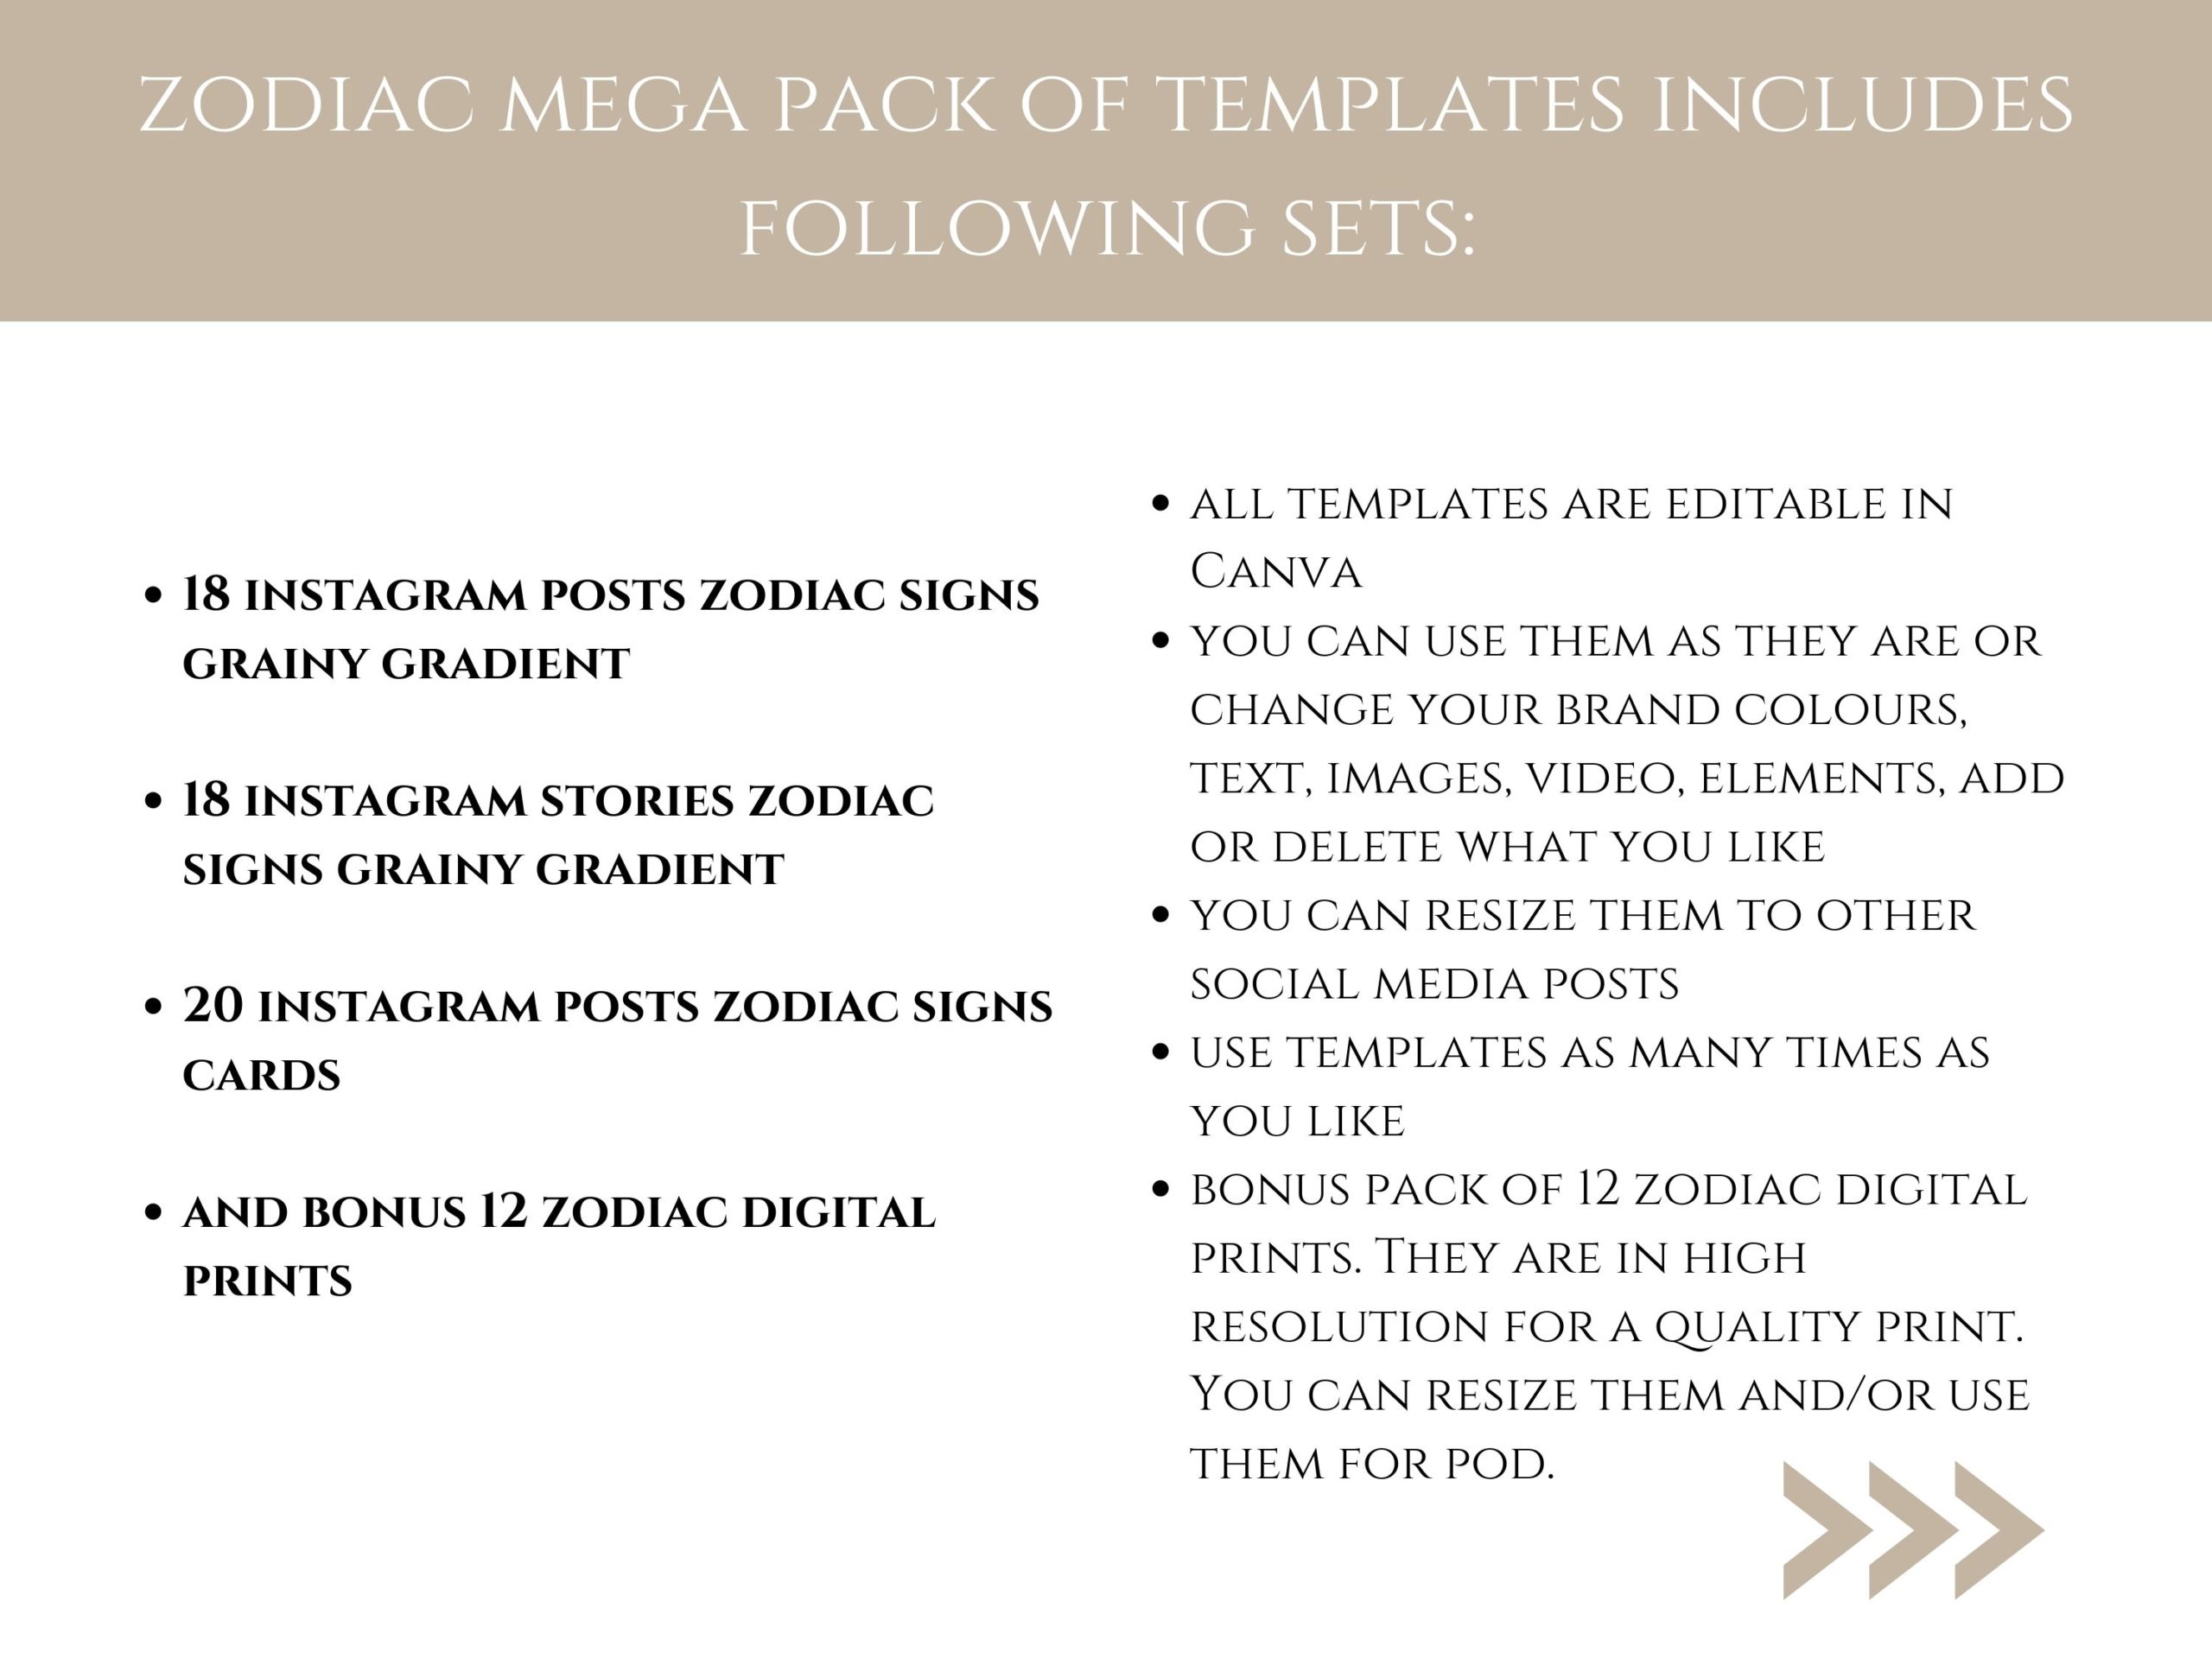 Zodiacs mega pack of templates